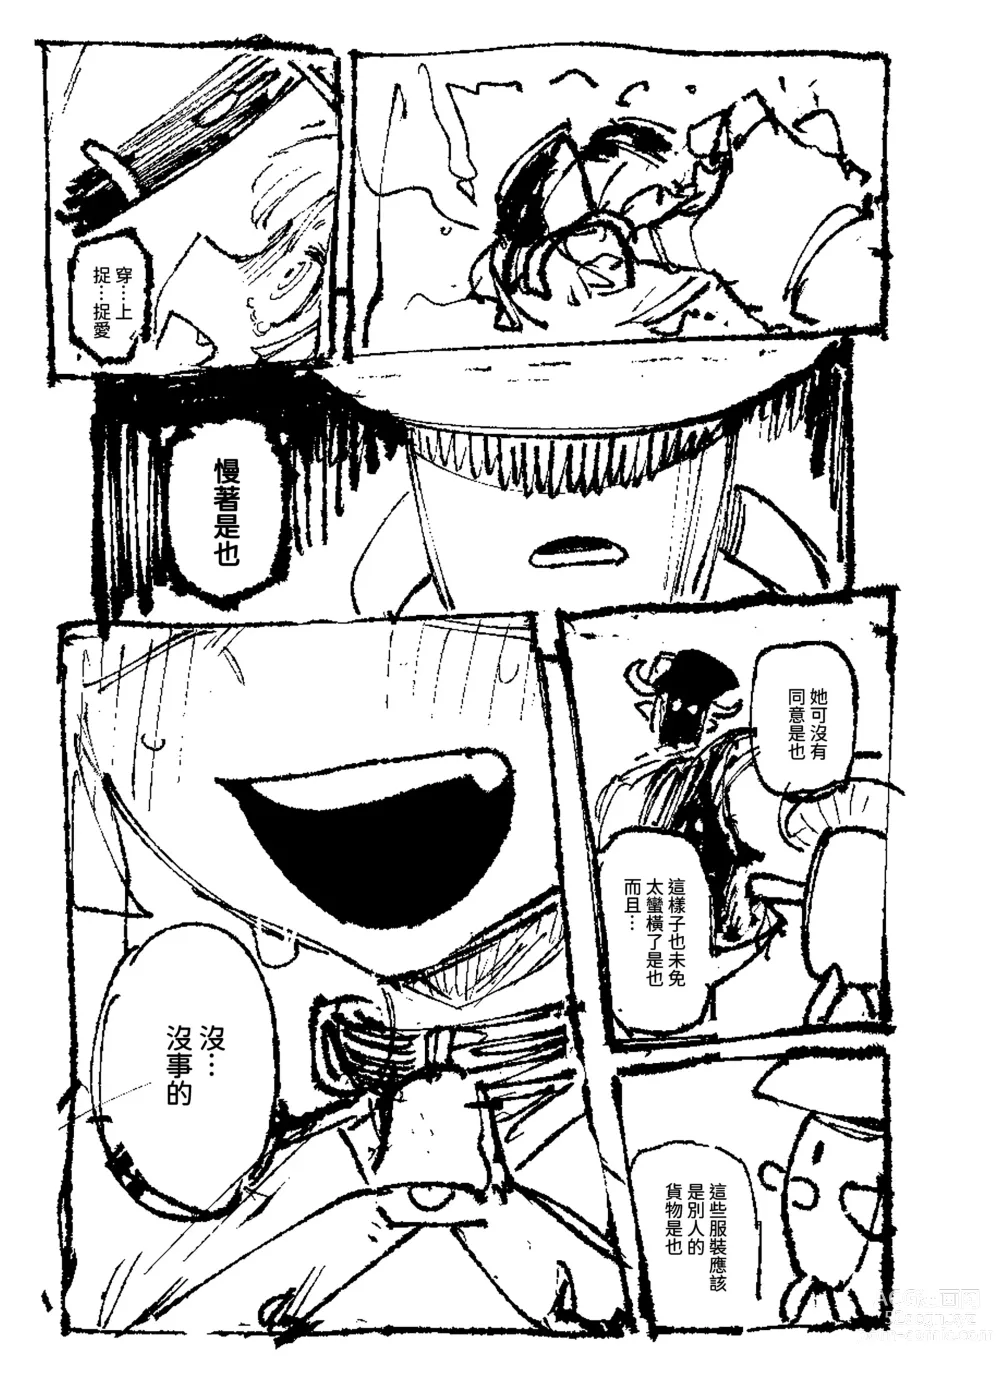 Page 20 of doujinshi 家裡過於潮濕長出致幻蘑菇意外誤食後發情的那些事